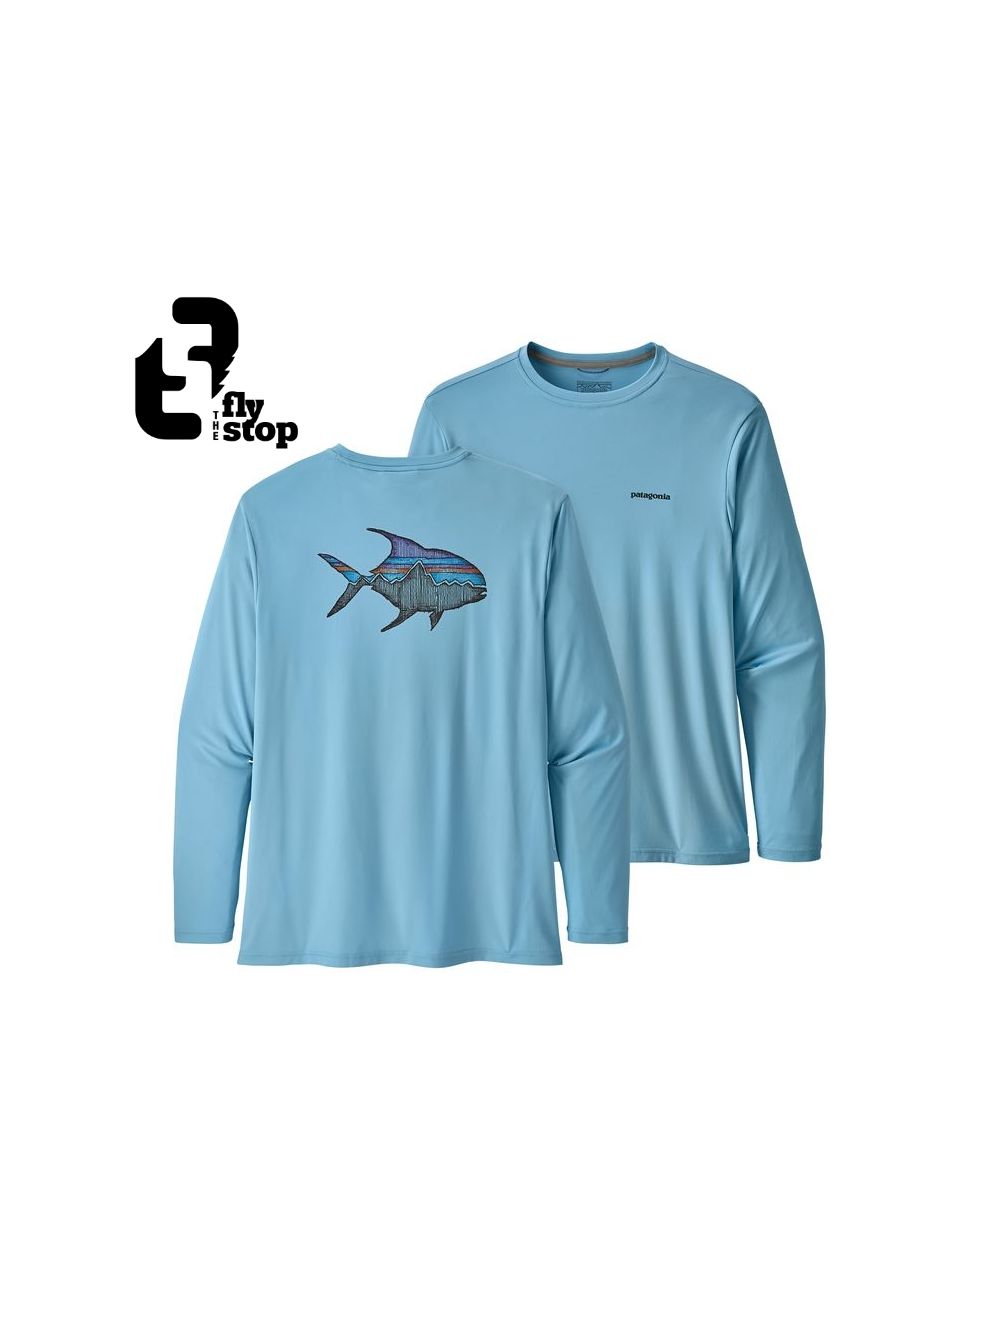 Patagonia Men's Graphic Tech Fish Long Sleeve T-Shirt